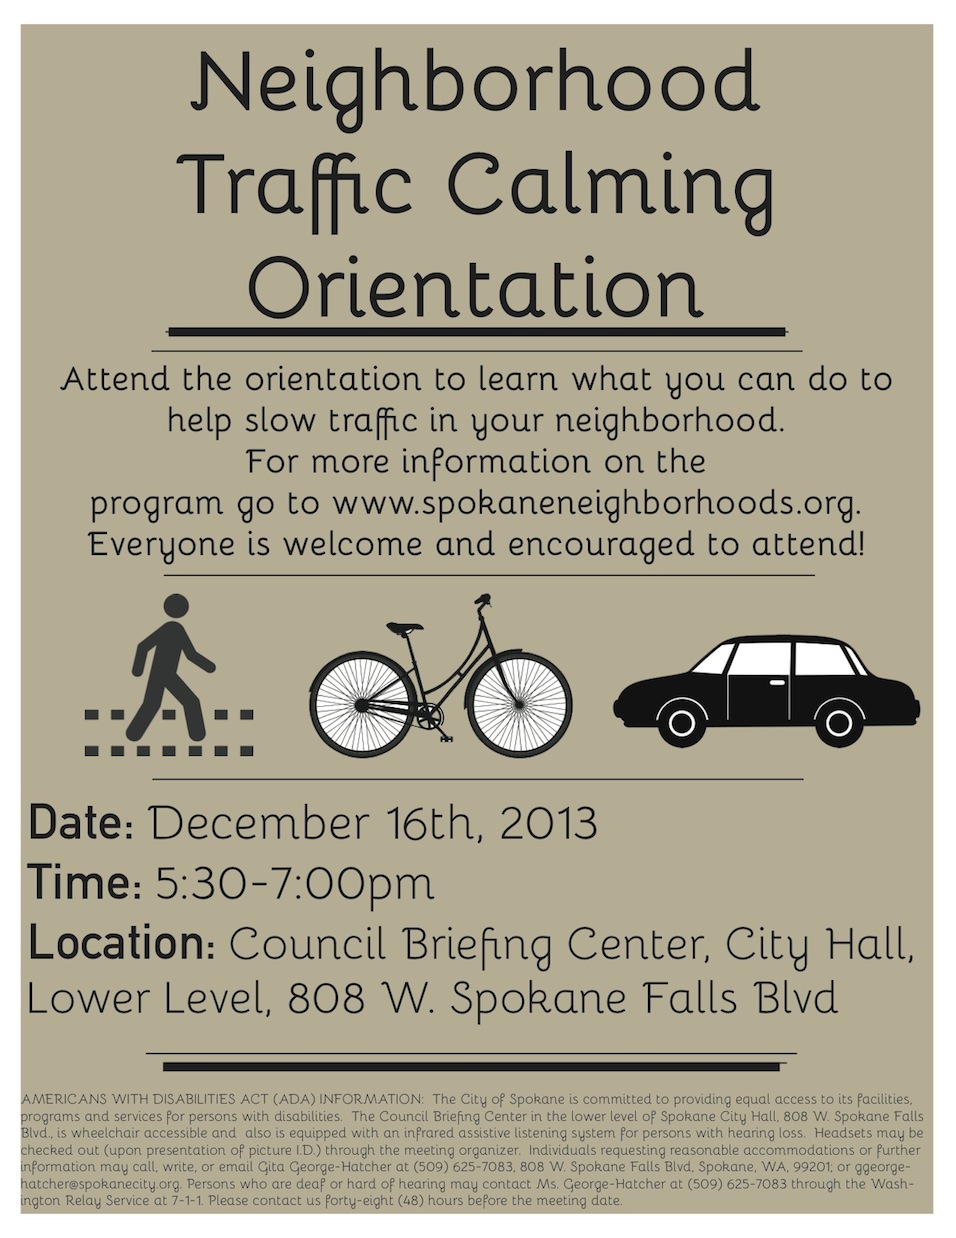 Traffic-Calming Orientation Tonight (Dec 16) - Emerson-Garfield Community